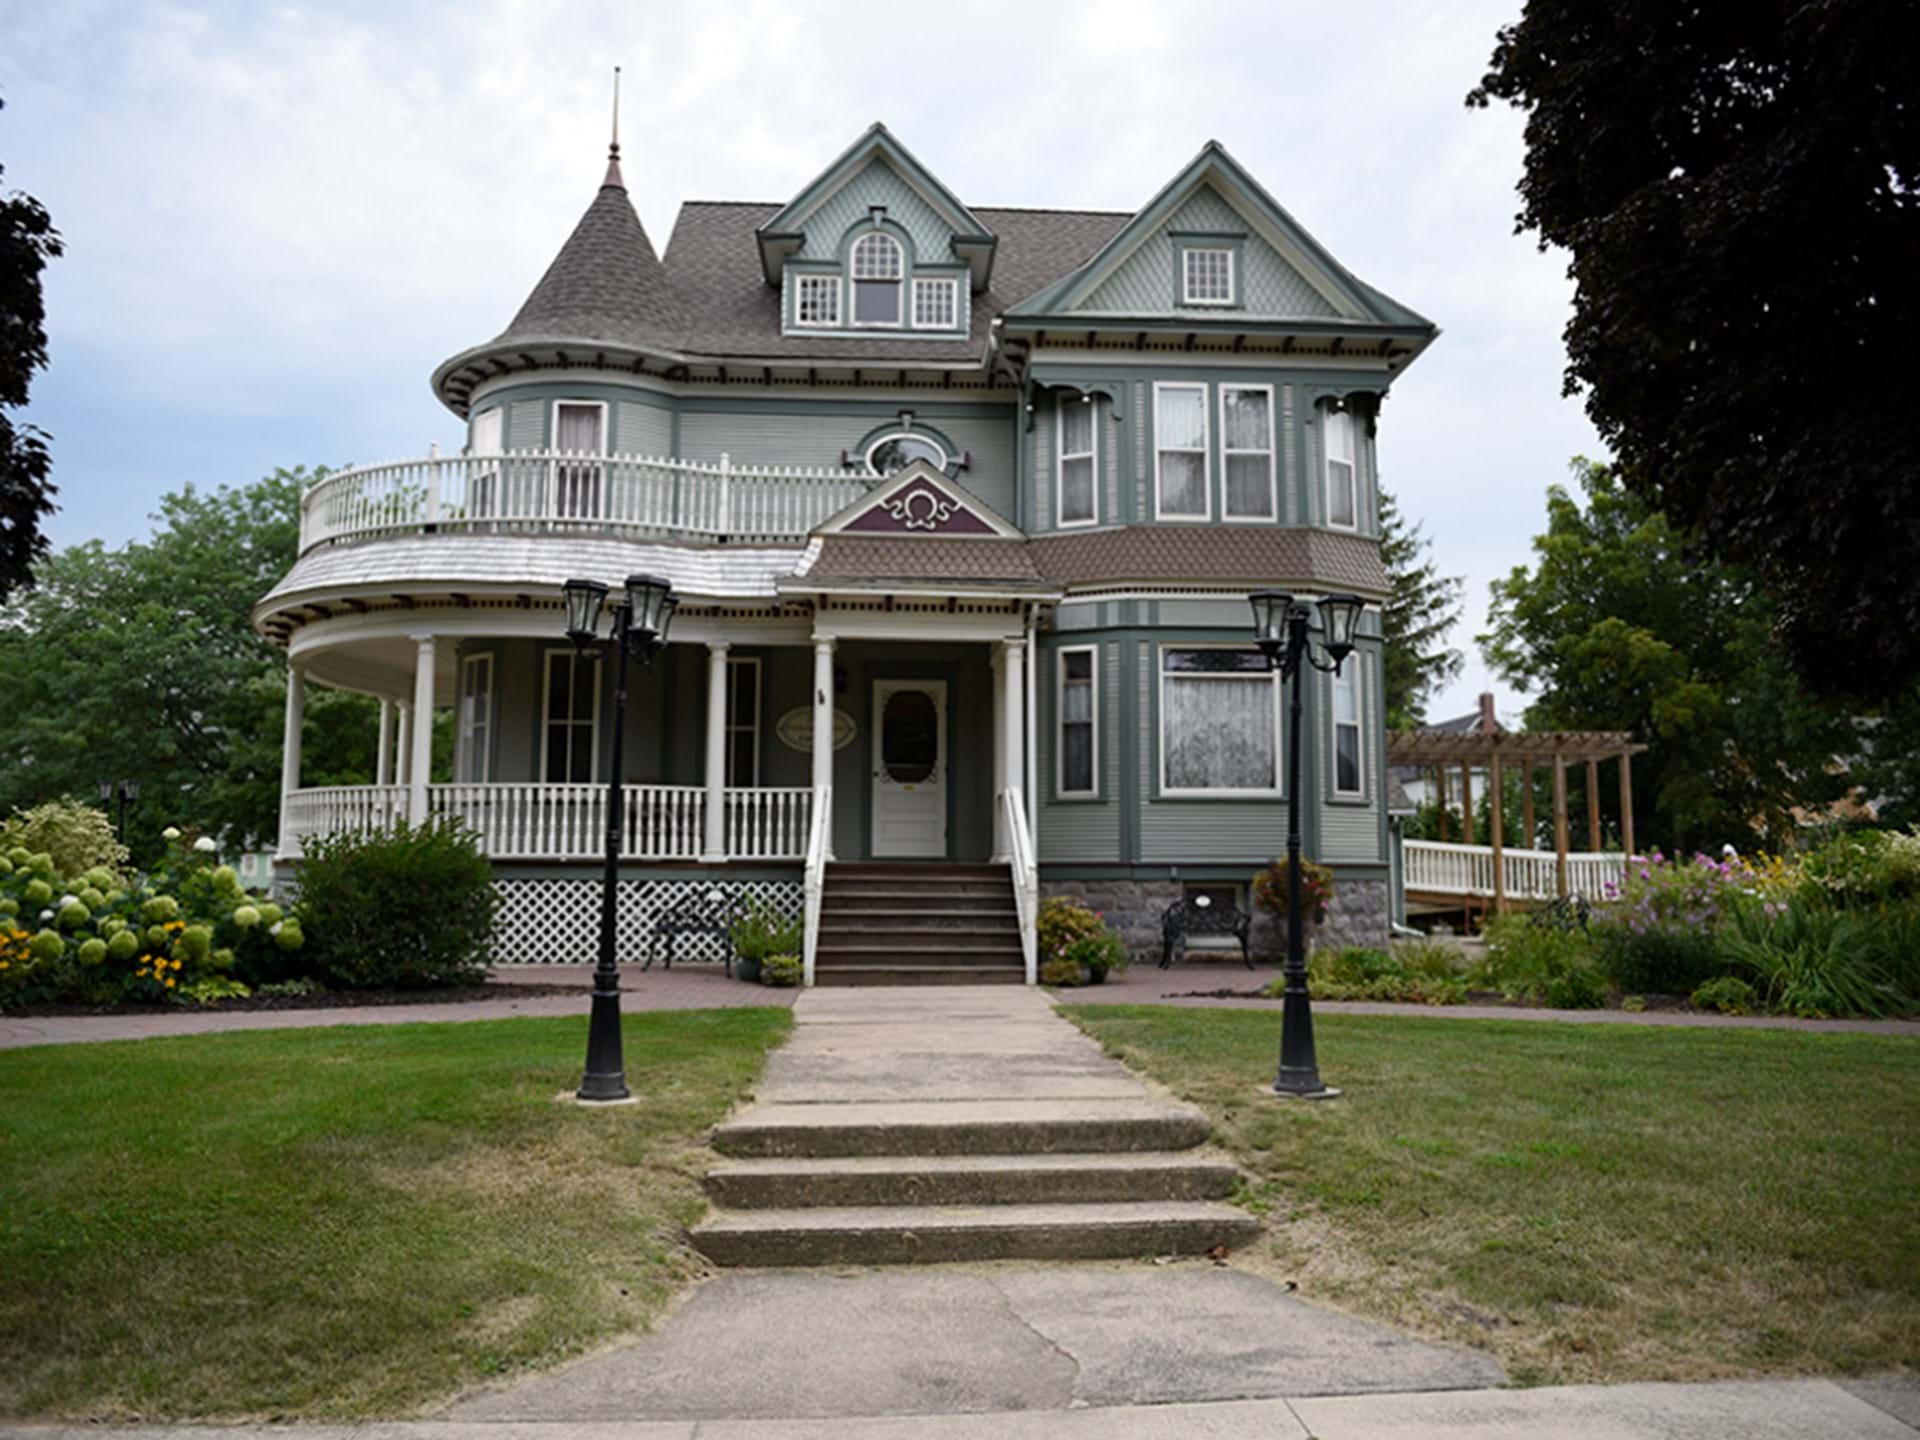 1901 Victorian House & Gardens, Lake Mills, Iowa